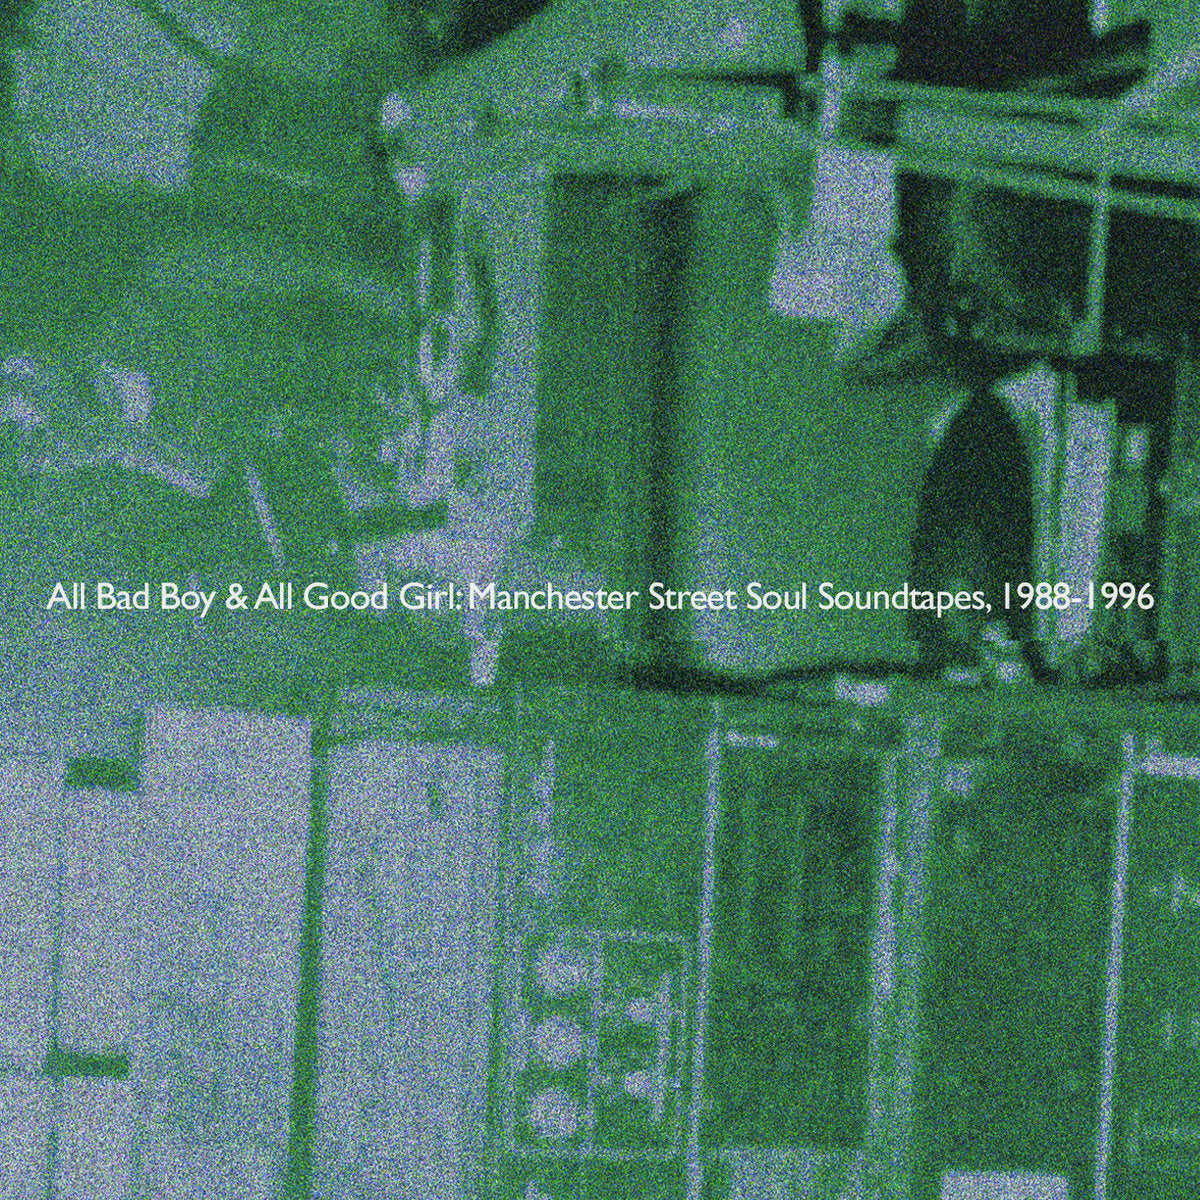 All Bad Boy & All Good Girl: Manchester Street Soul Soundtapes 1988-1996